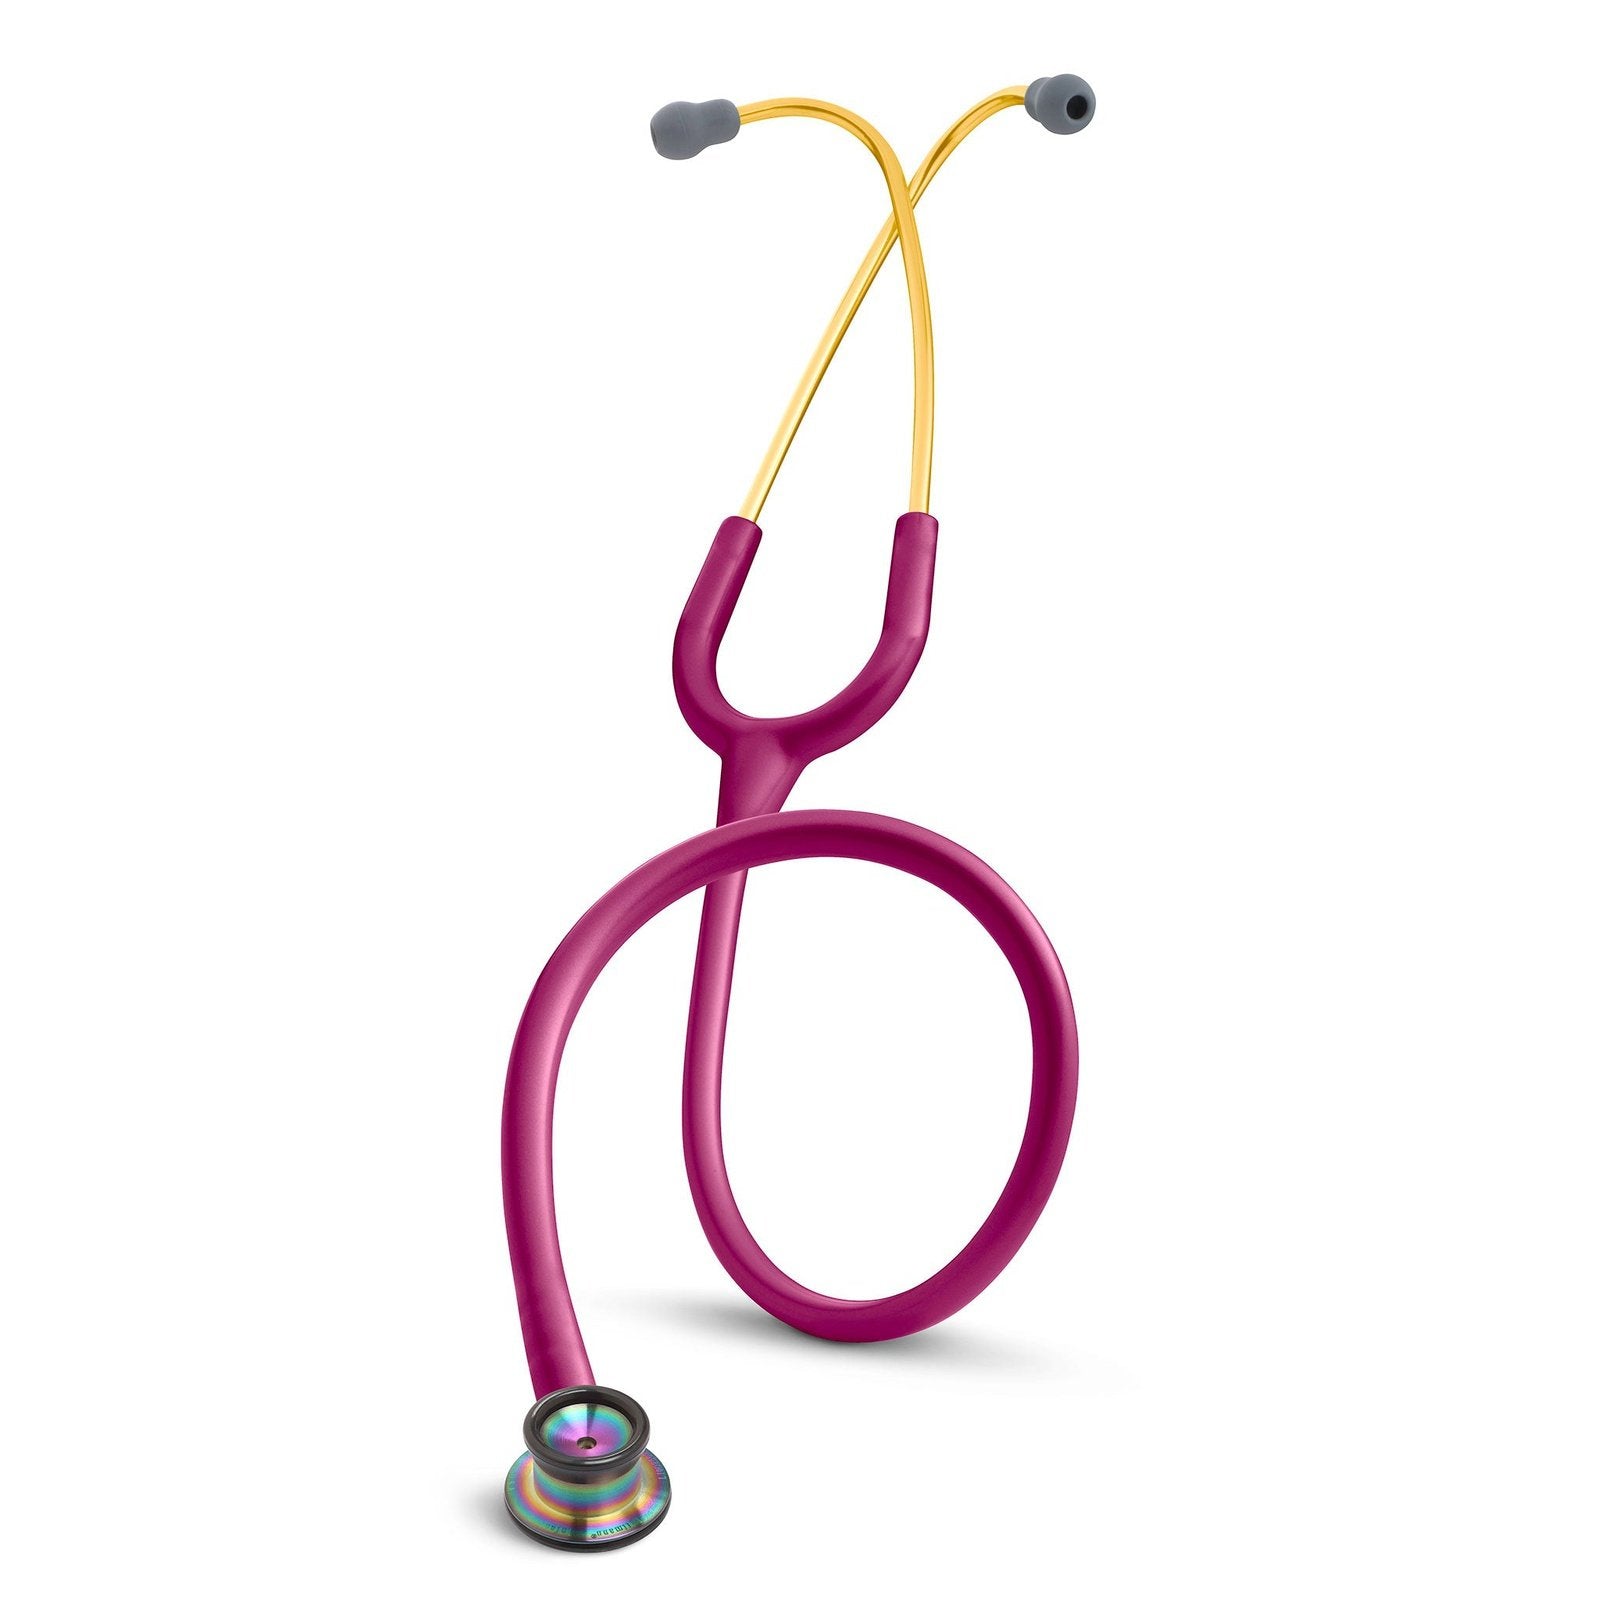 3M™ Littmann® Classic II Pediatric Stethoscope